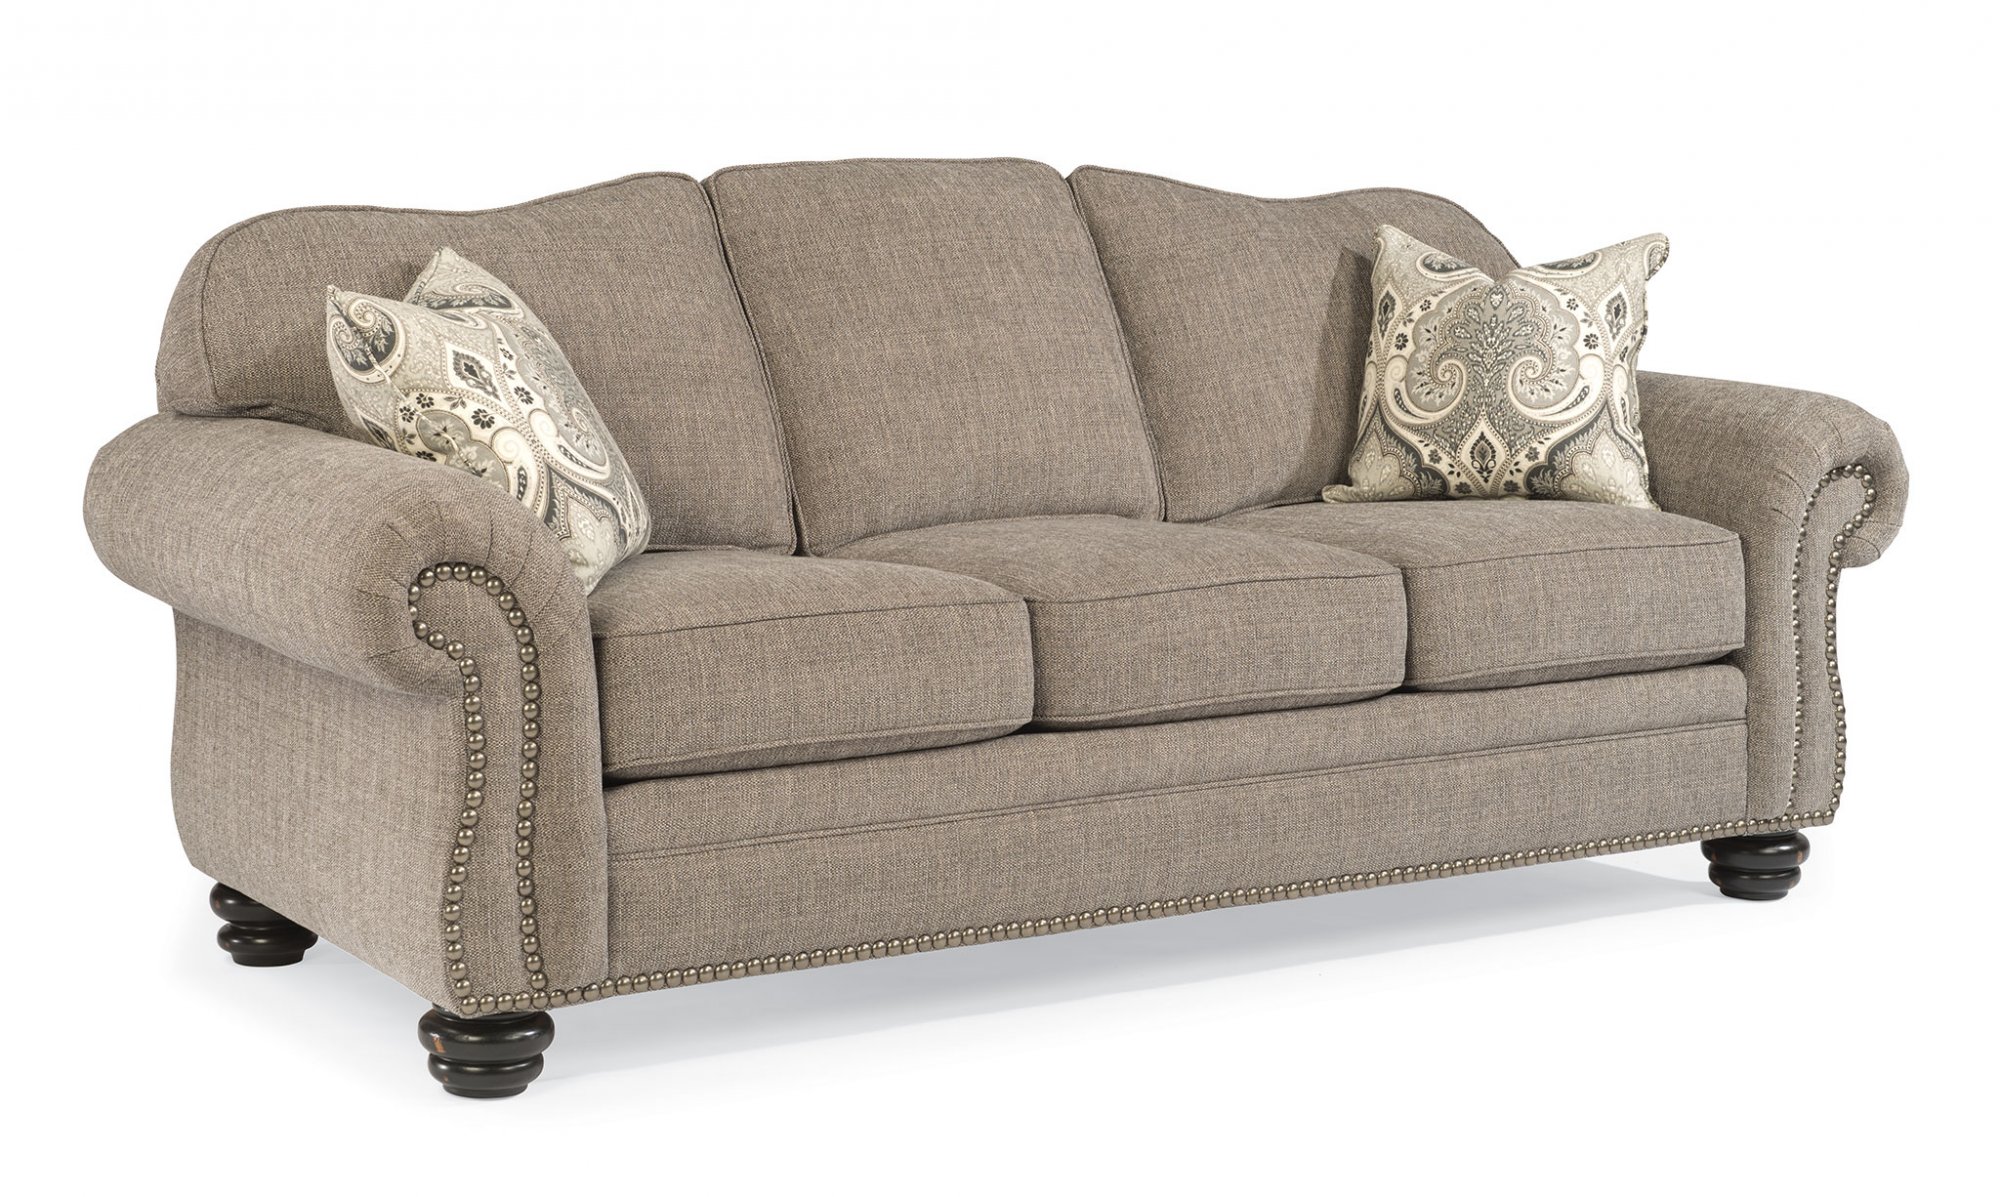 flexsteel sofa share via email download a high-resolution image WCSVDKF